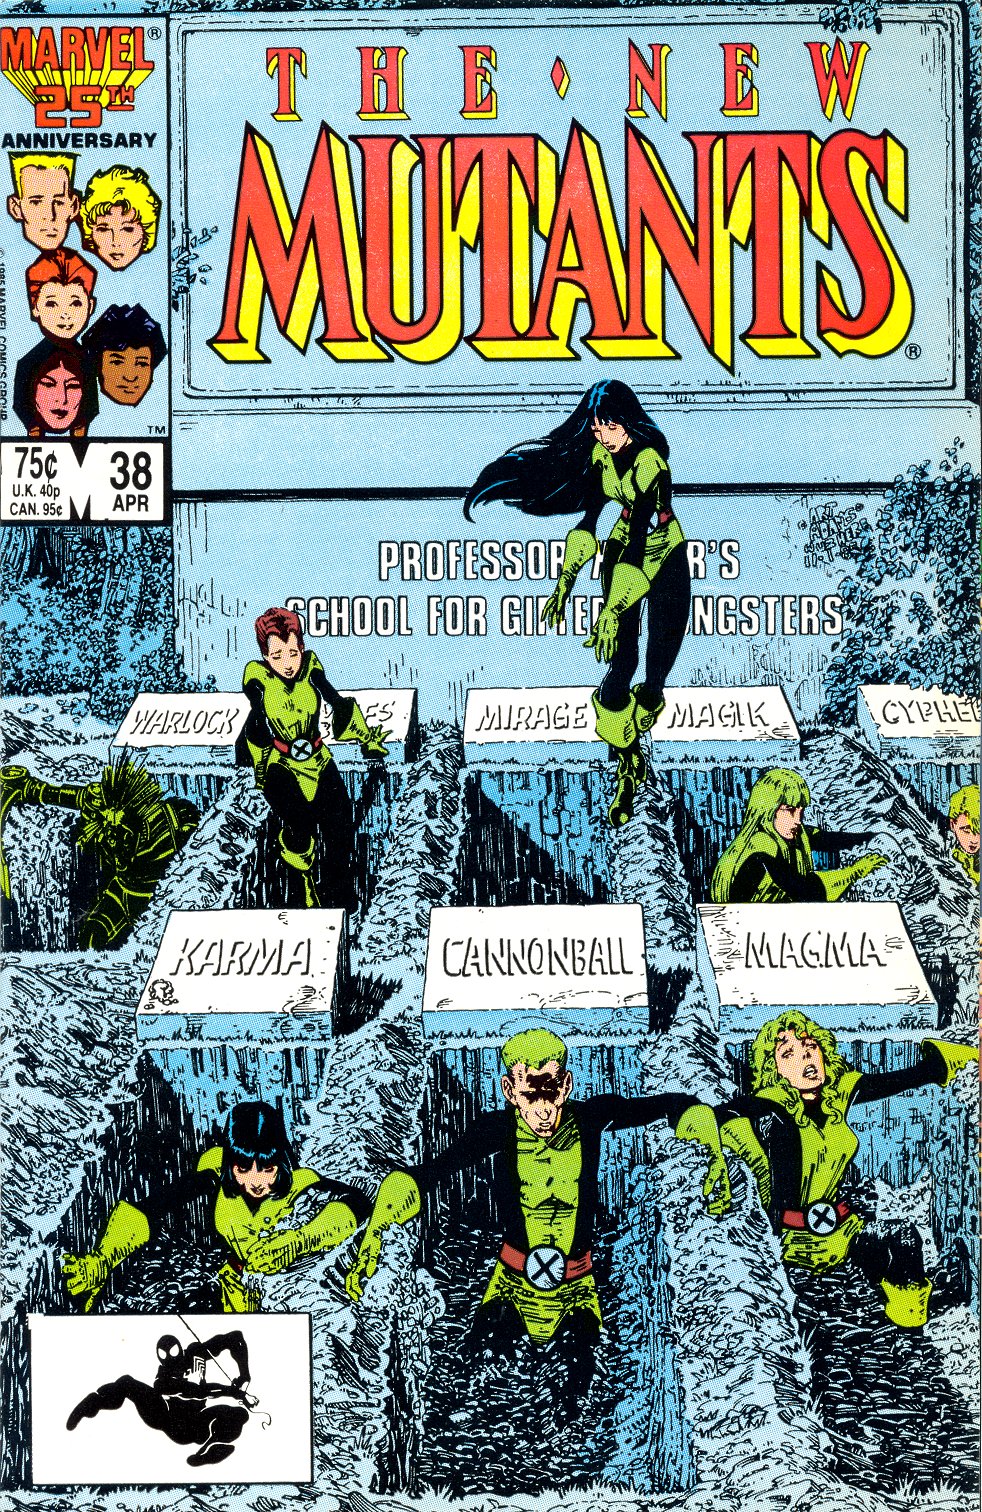 New Mutants Vol. 1 #38